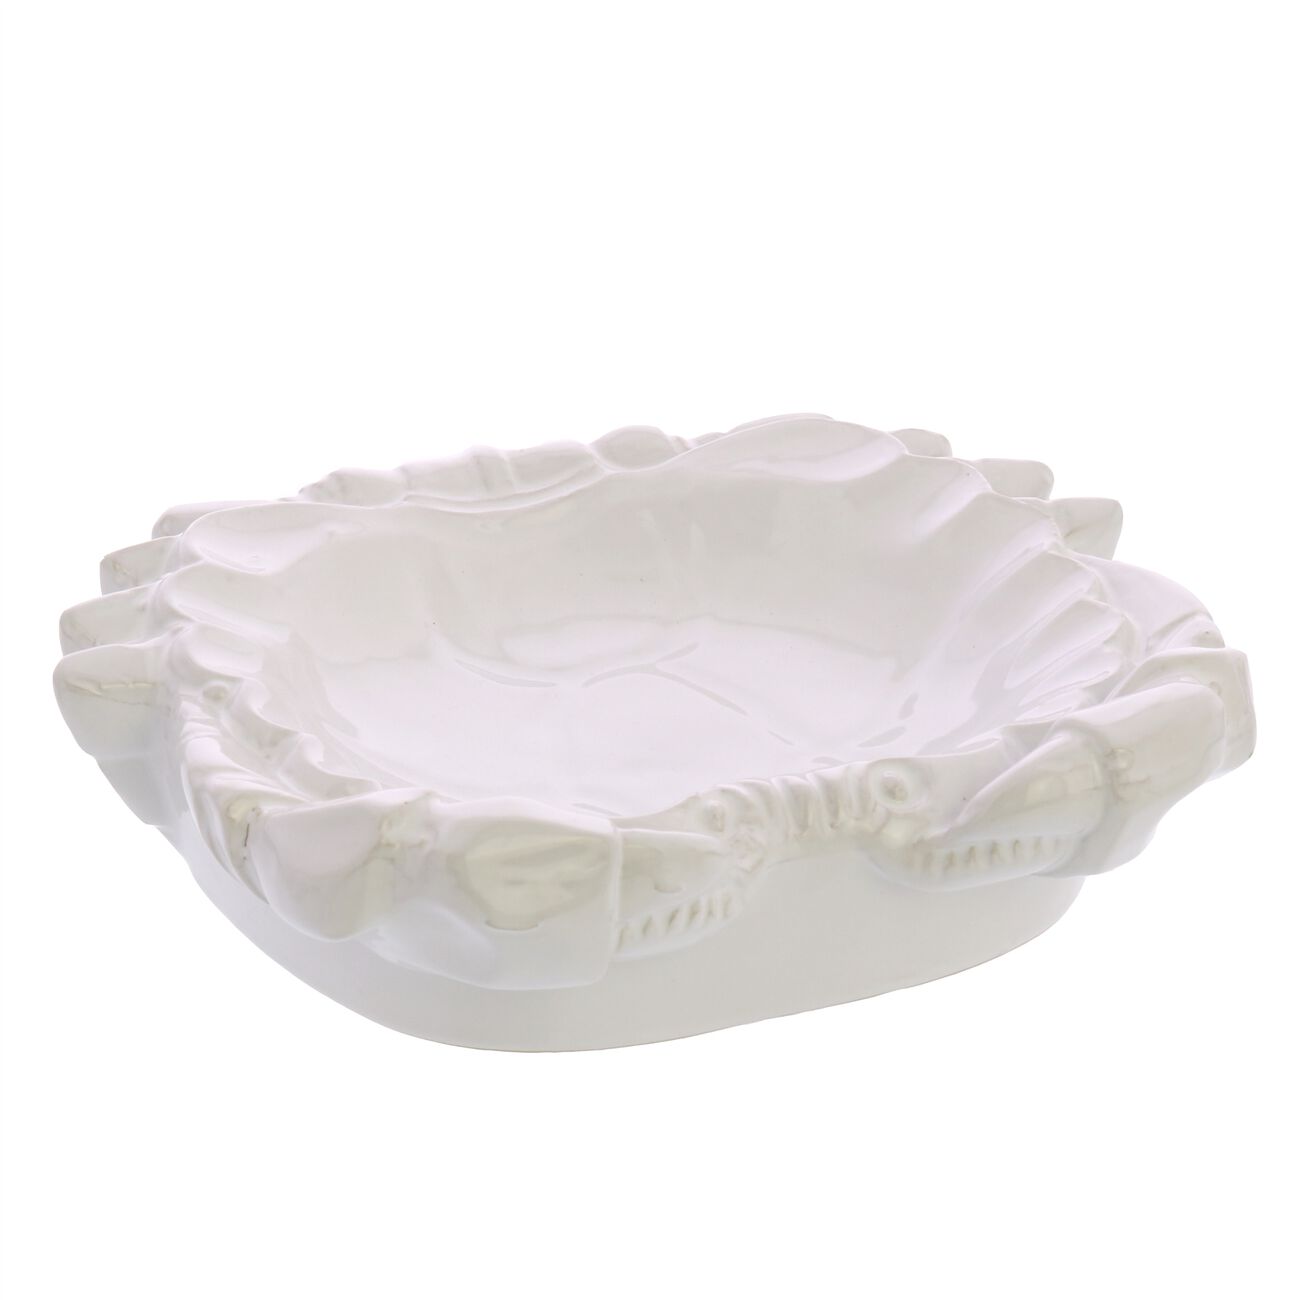 Transitional Styled Ceramic Crab Shaped Large Soap Dish, White